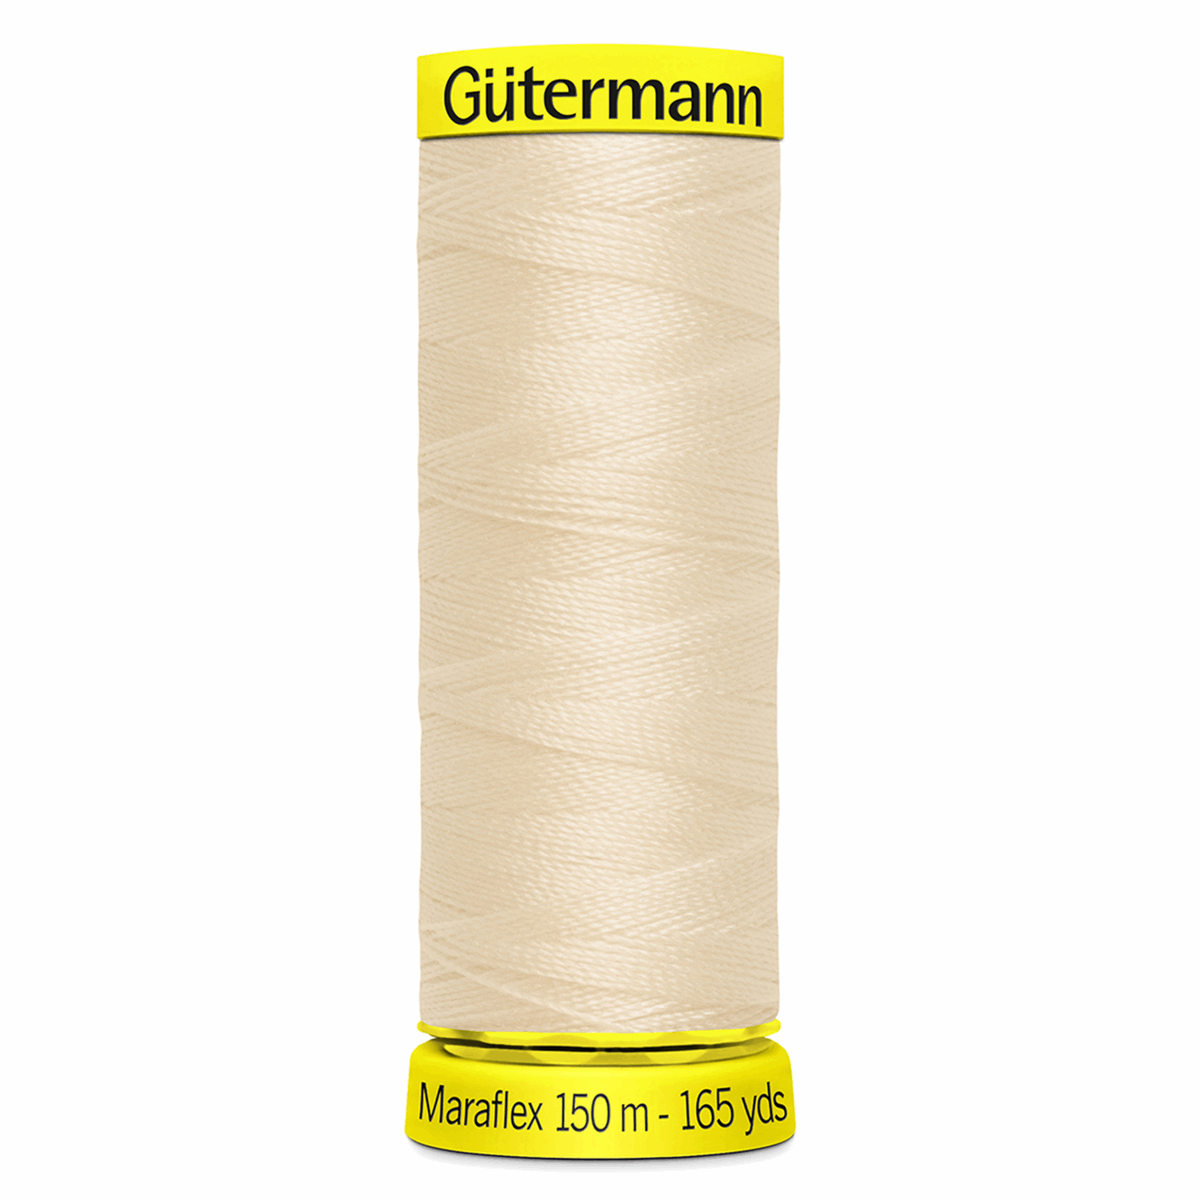 Gutermann Maraflex Elastic Sewing Thread 150m Dark Cream 169